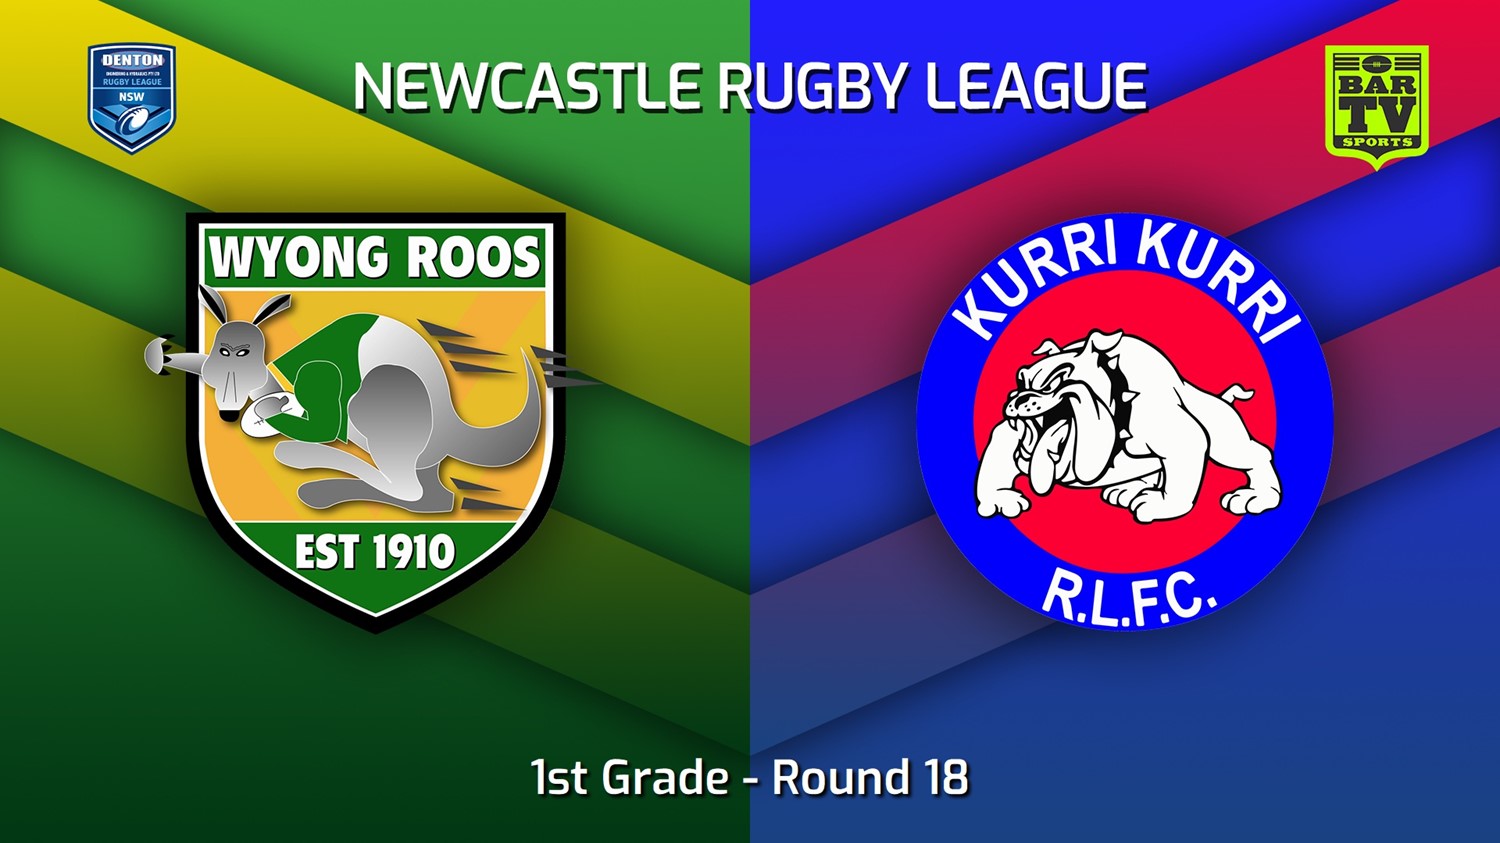 220806-Newcastle Round 18 - 1st Grade - Wyong Roos v Kurri Kurri Bulldogs Slate Image